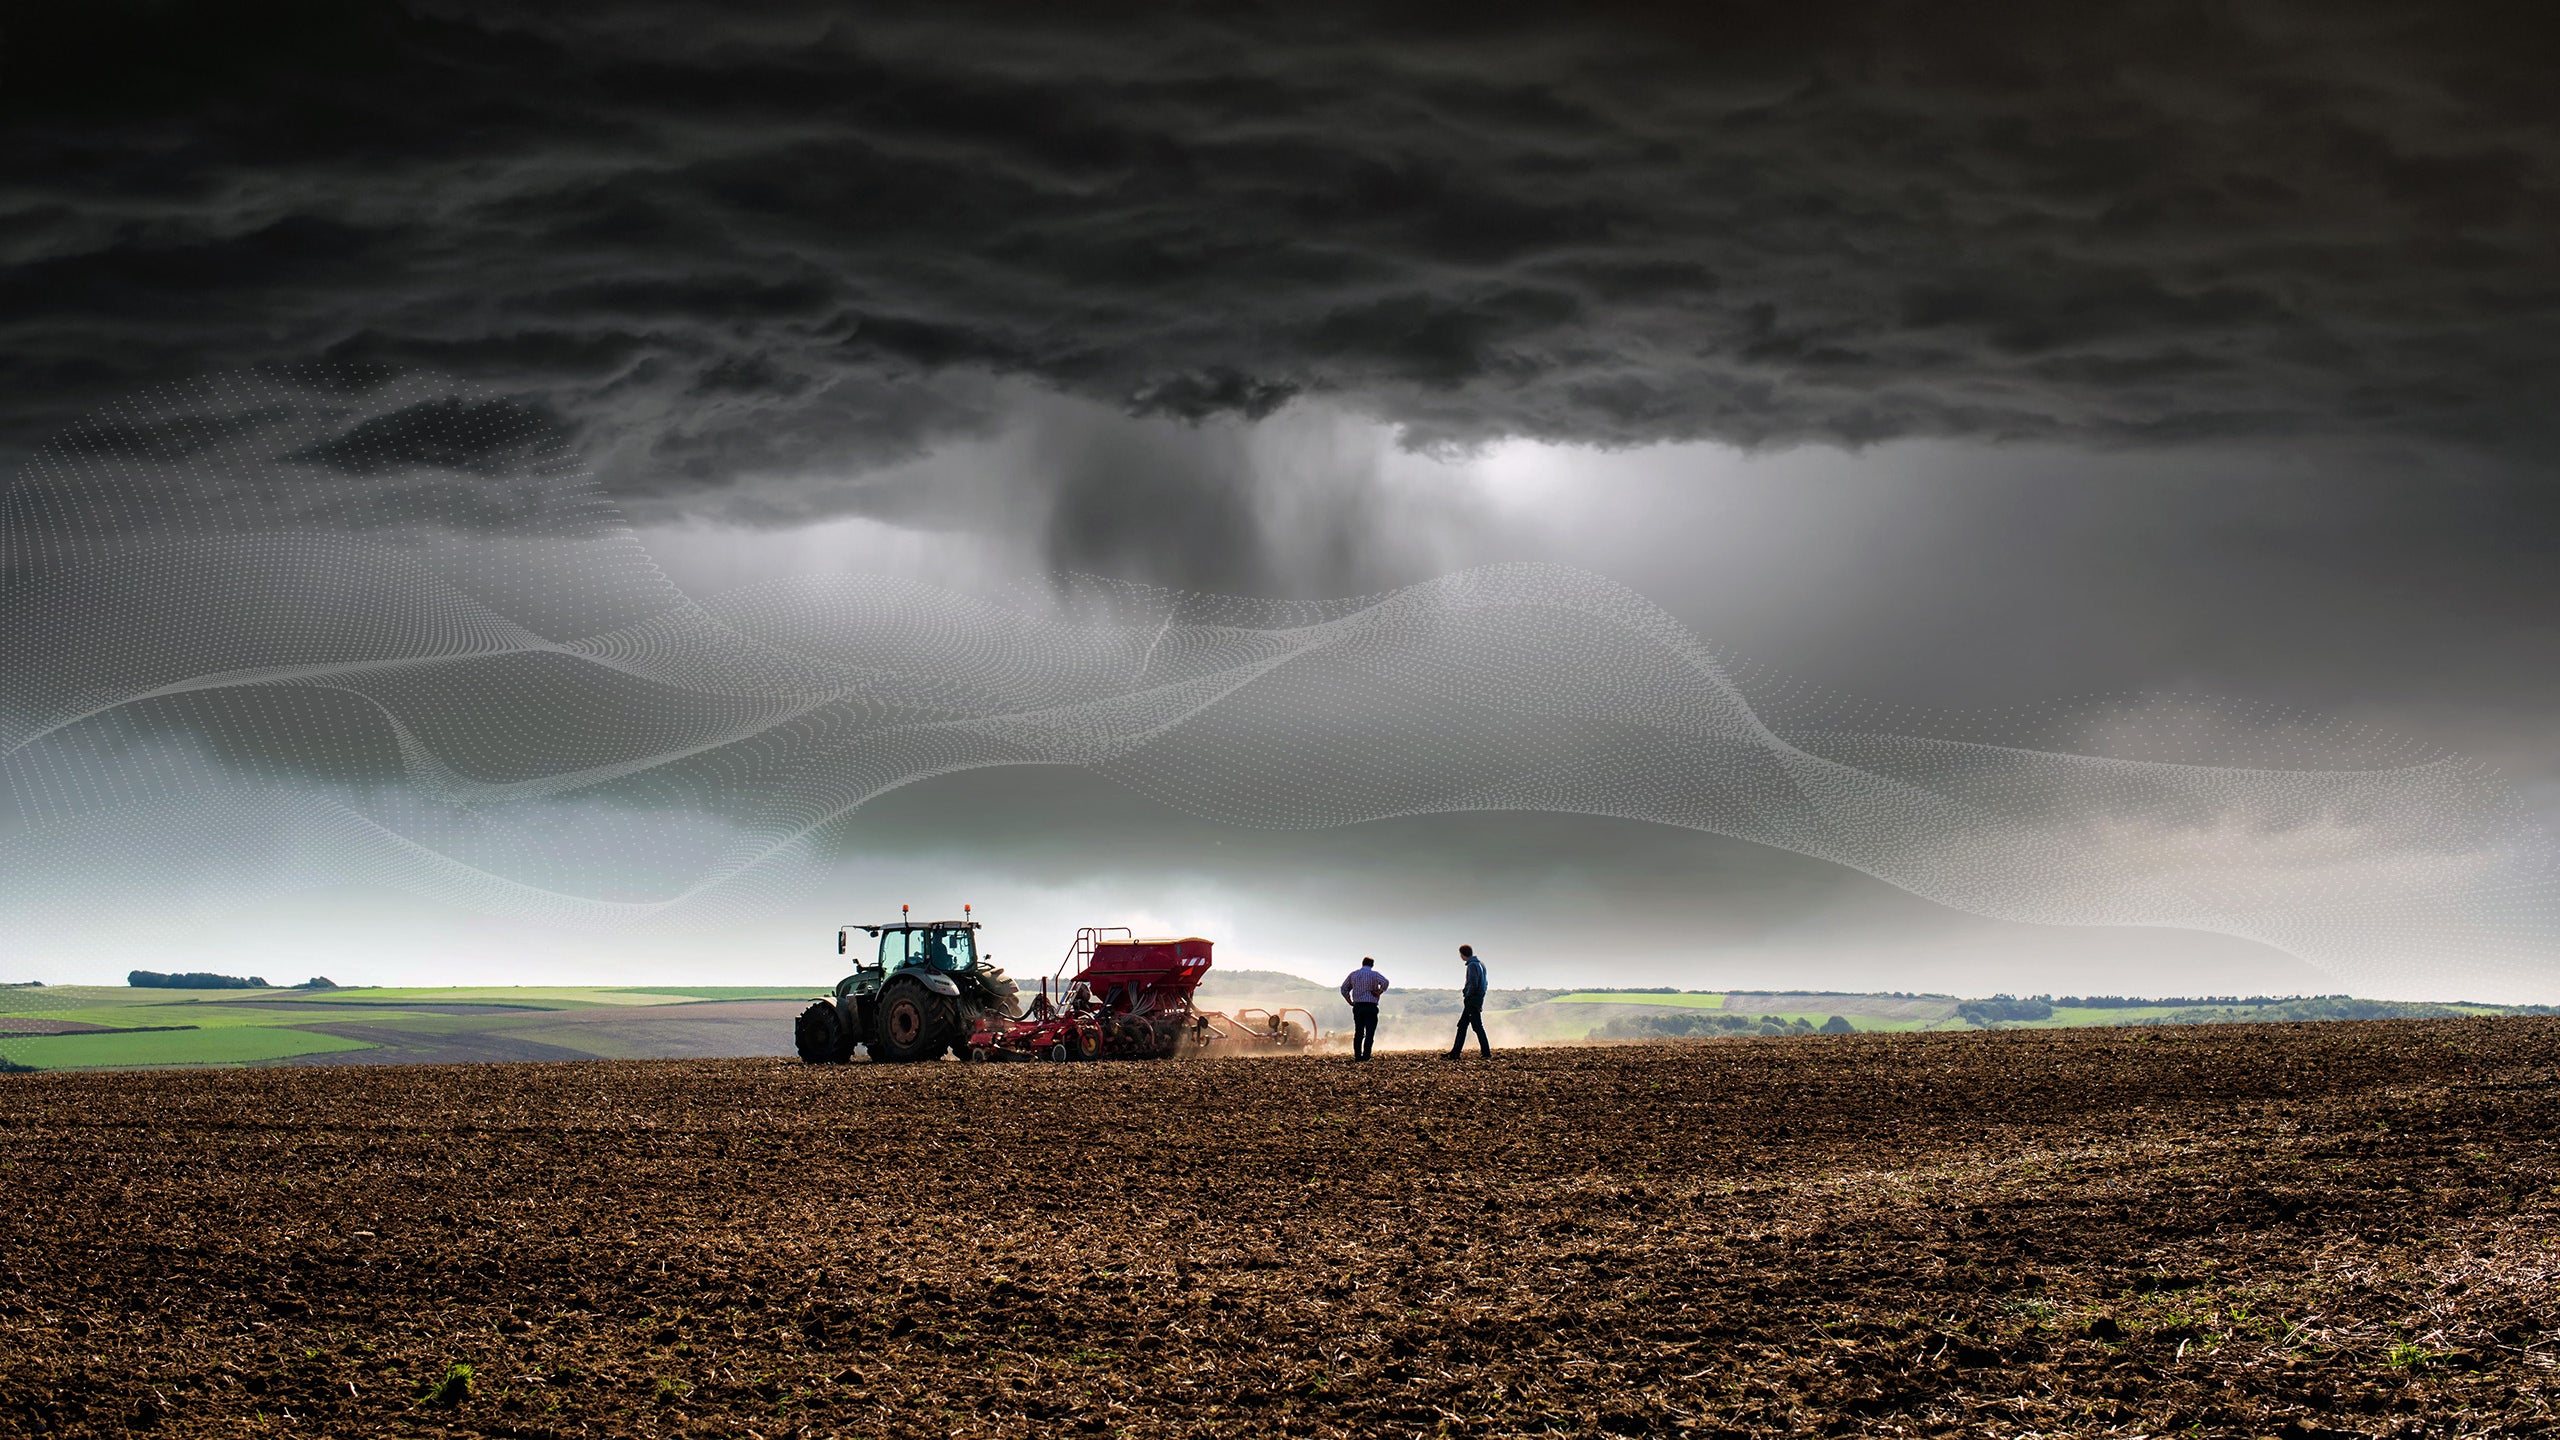 Tractor in farm field under stormy sky